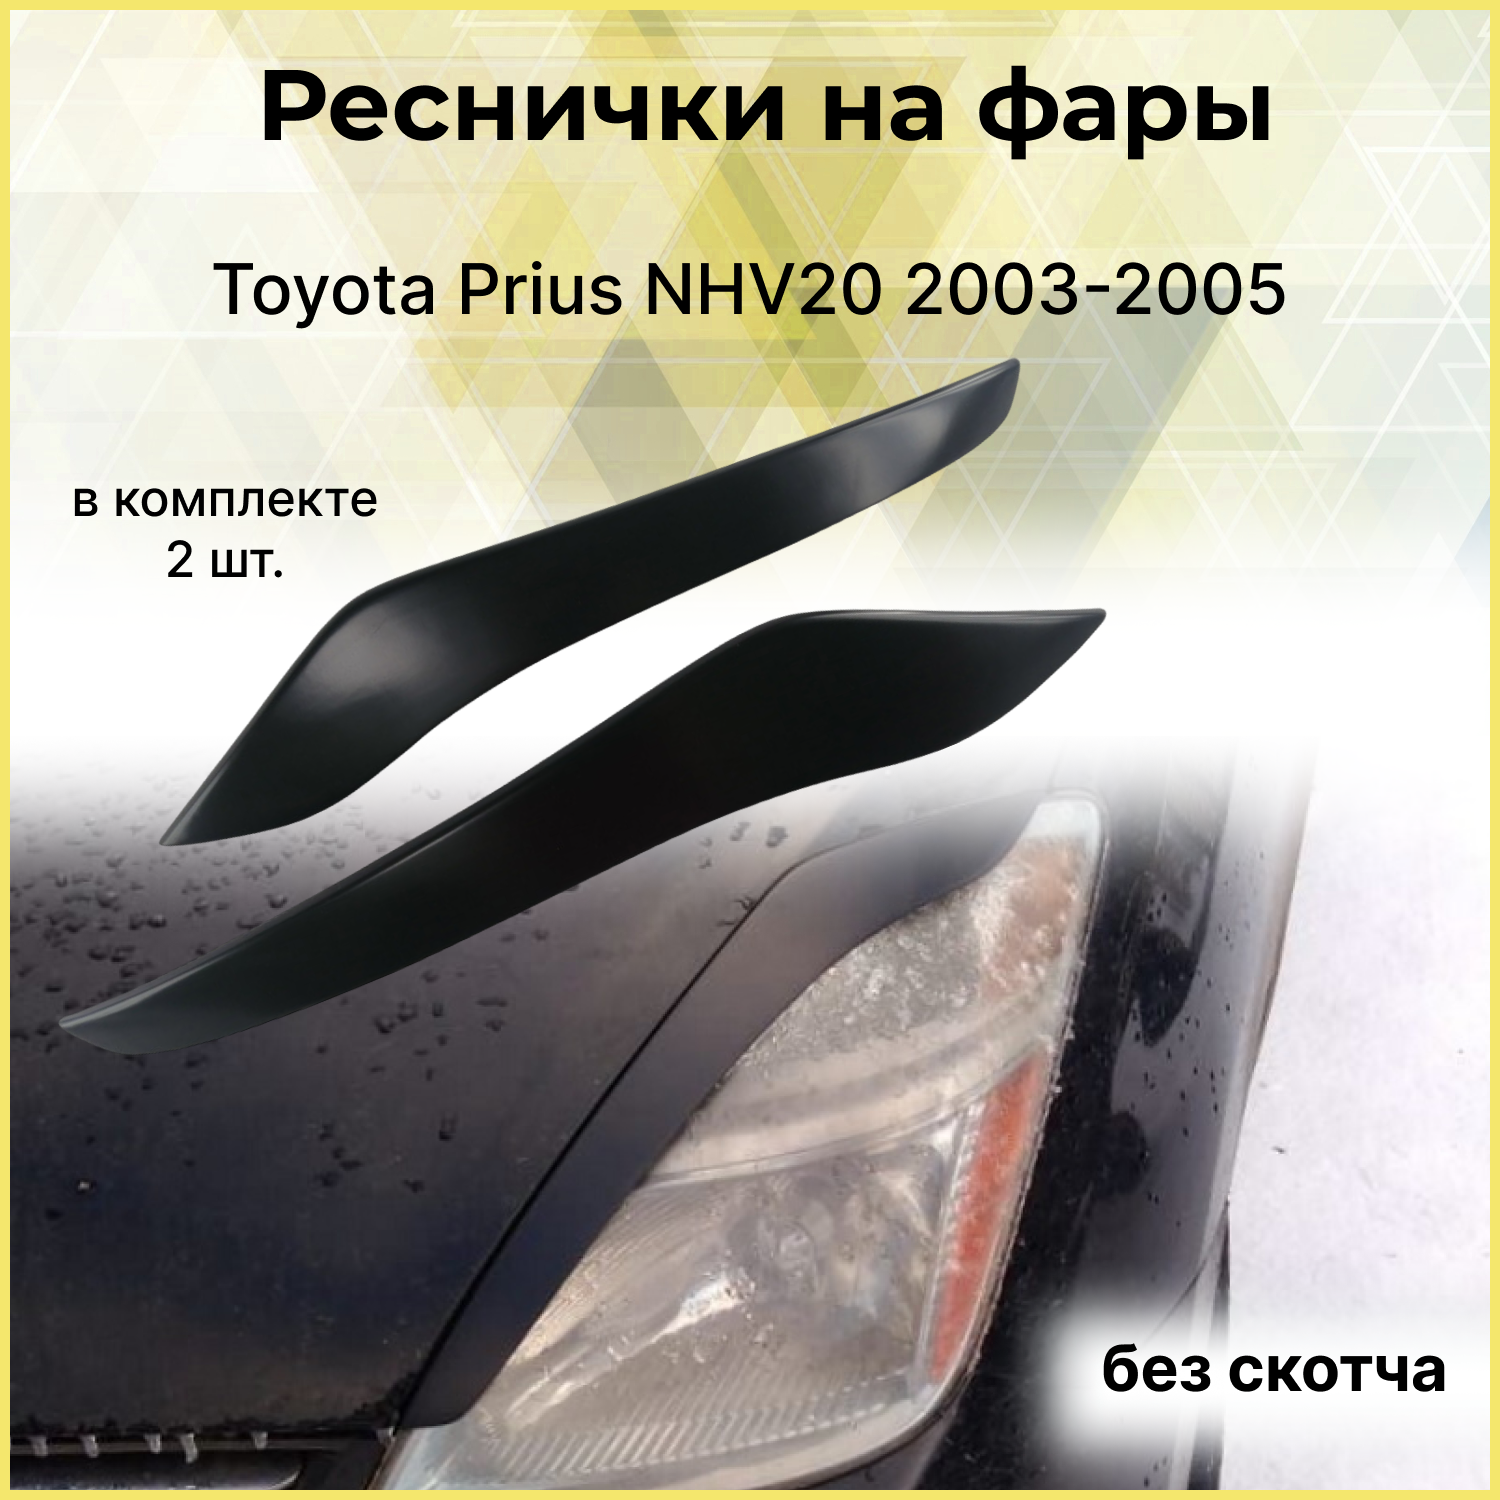 Реснички на фары Toyota Prius NHV20 2003-2005